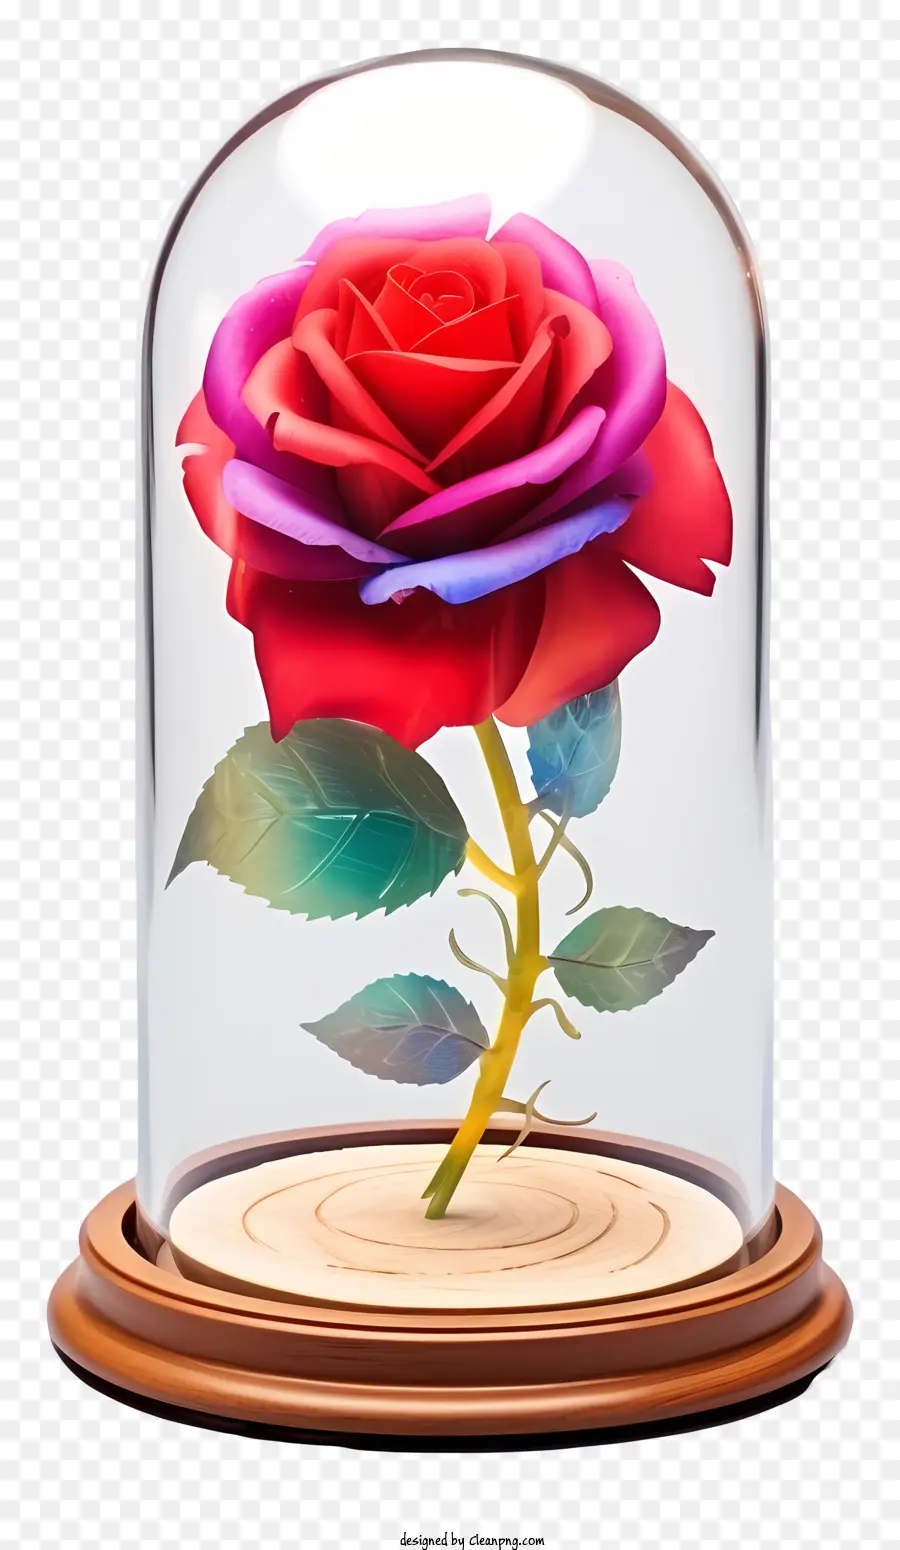 rosa rose - Rosa Rose in Glaskuppel, glühend und real